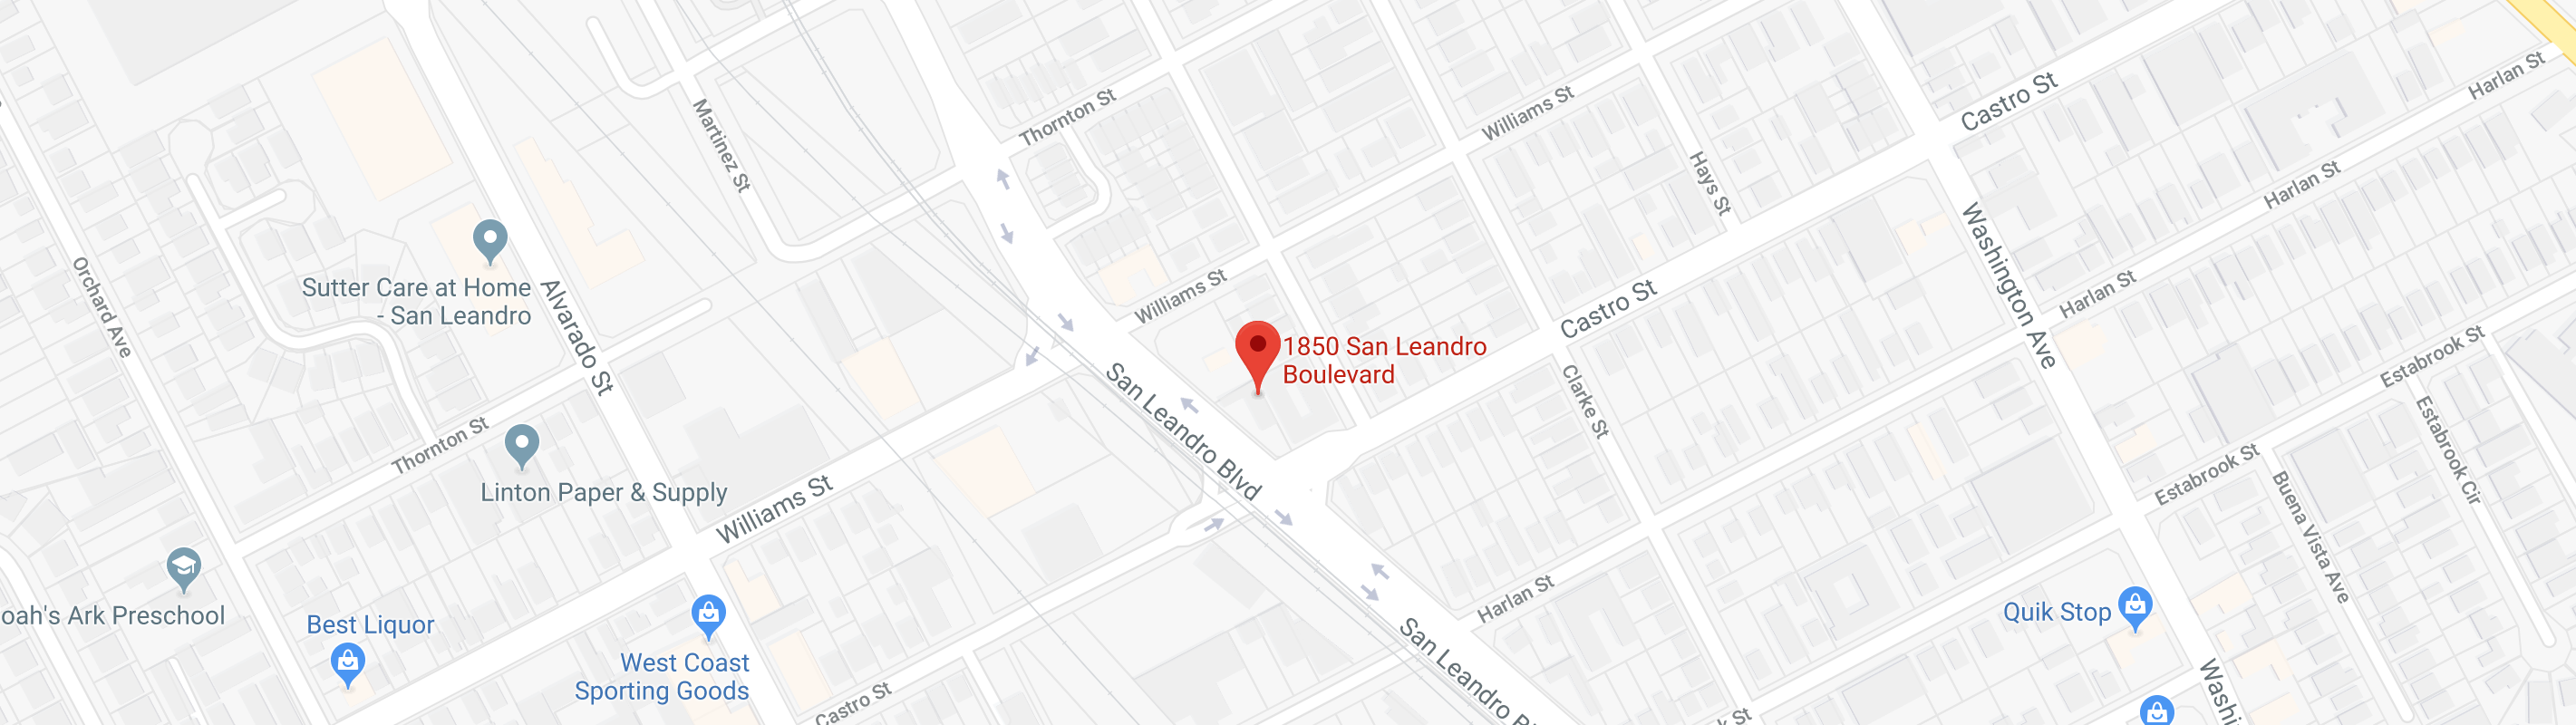 Map image for 1850 San Leandro Blvd, San Leandro, CA 94577